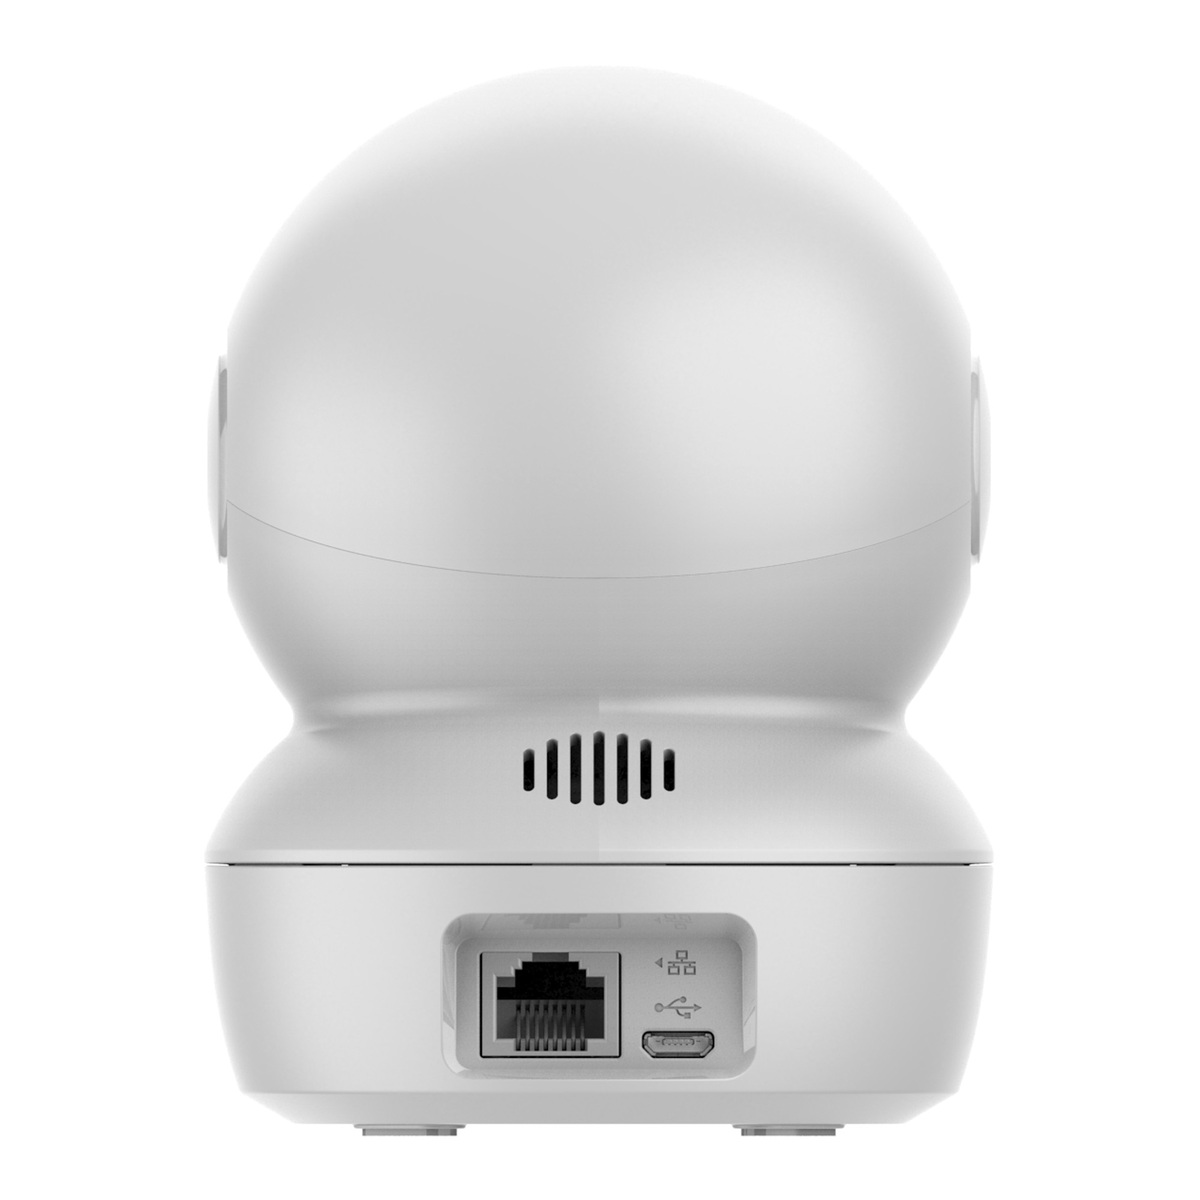 Ezviz Smart Home Security Camera, 2 MP, H6c